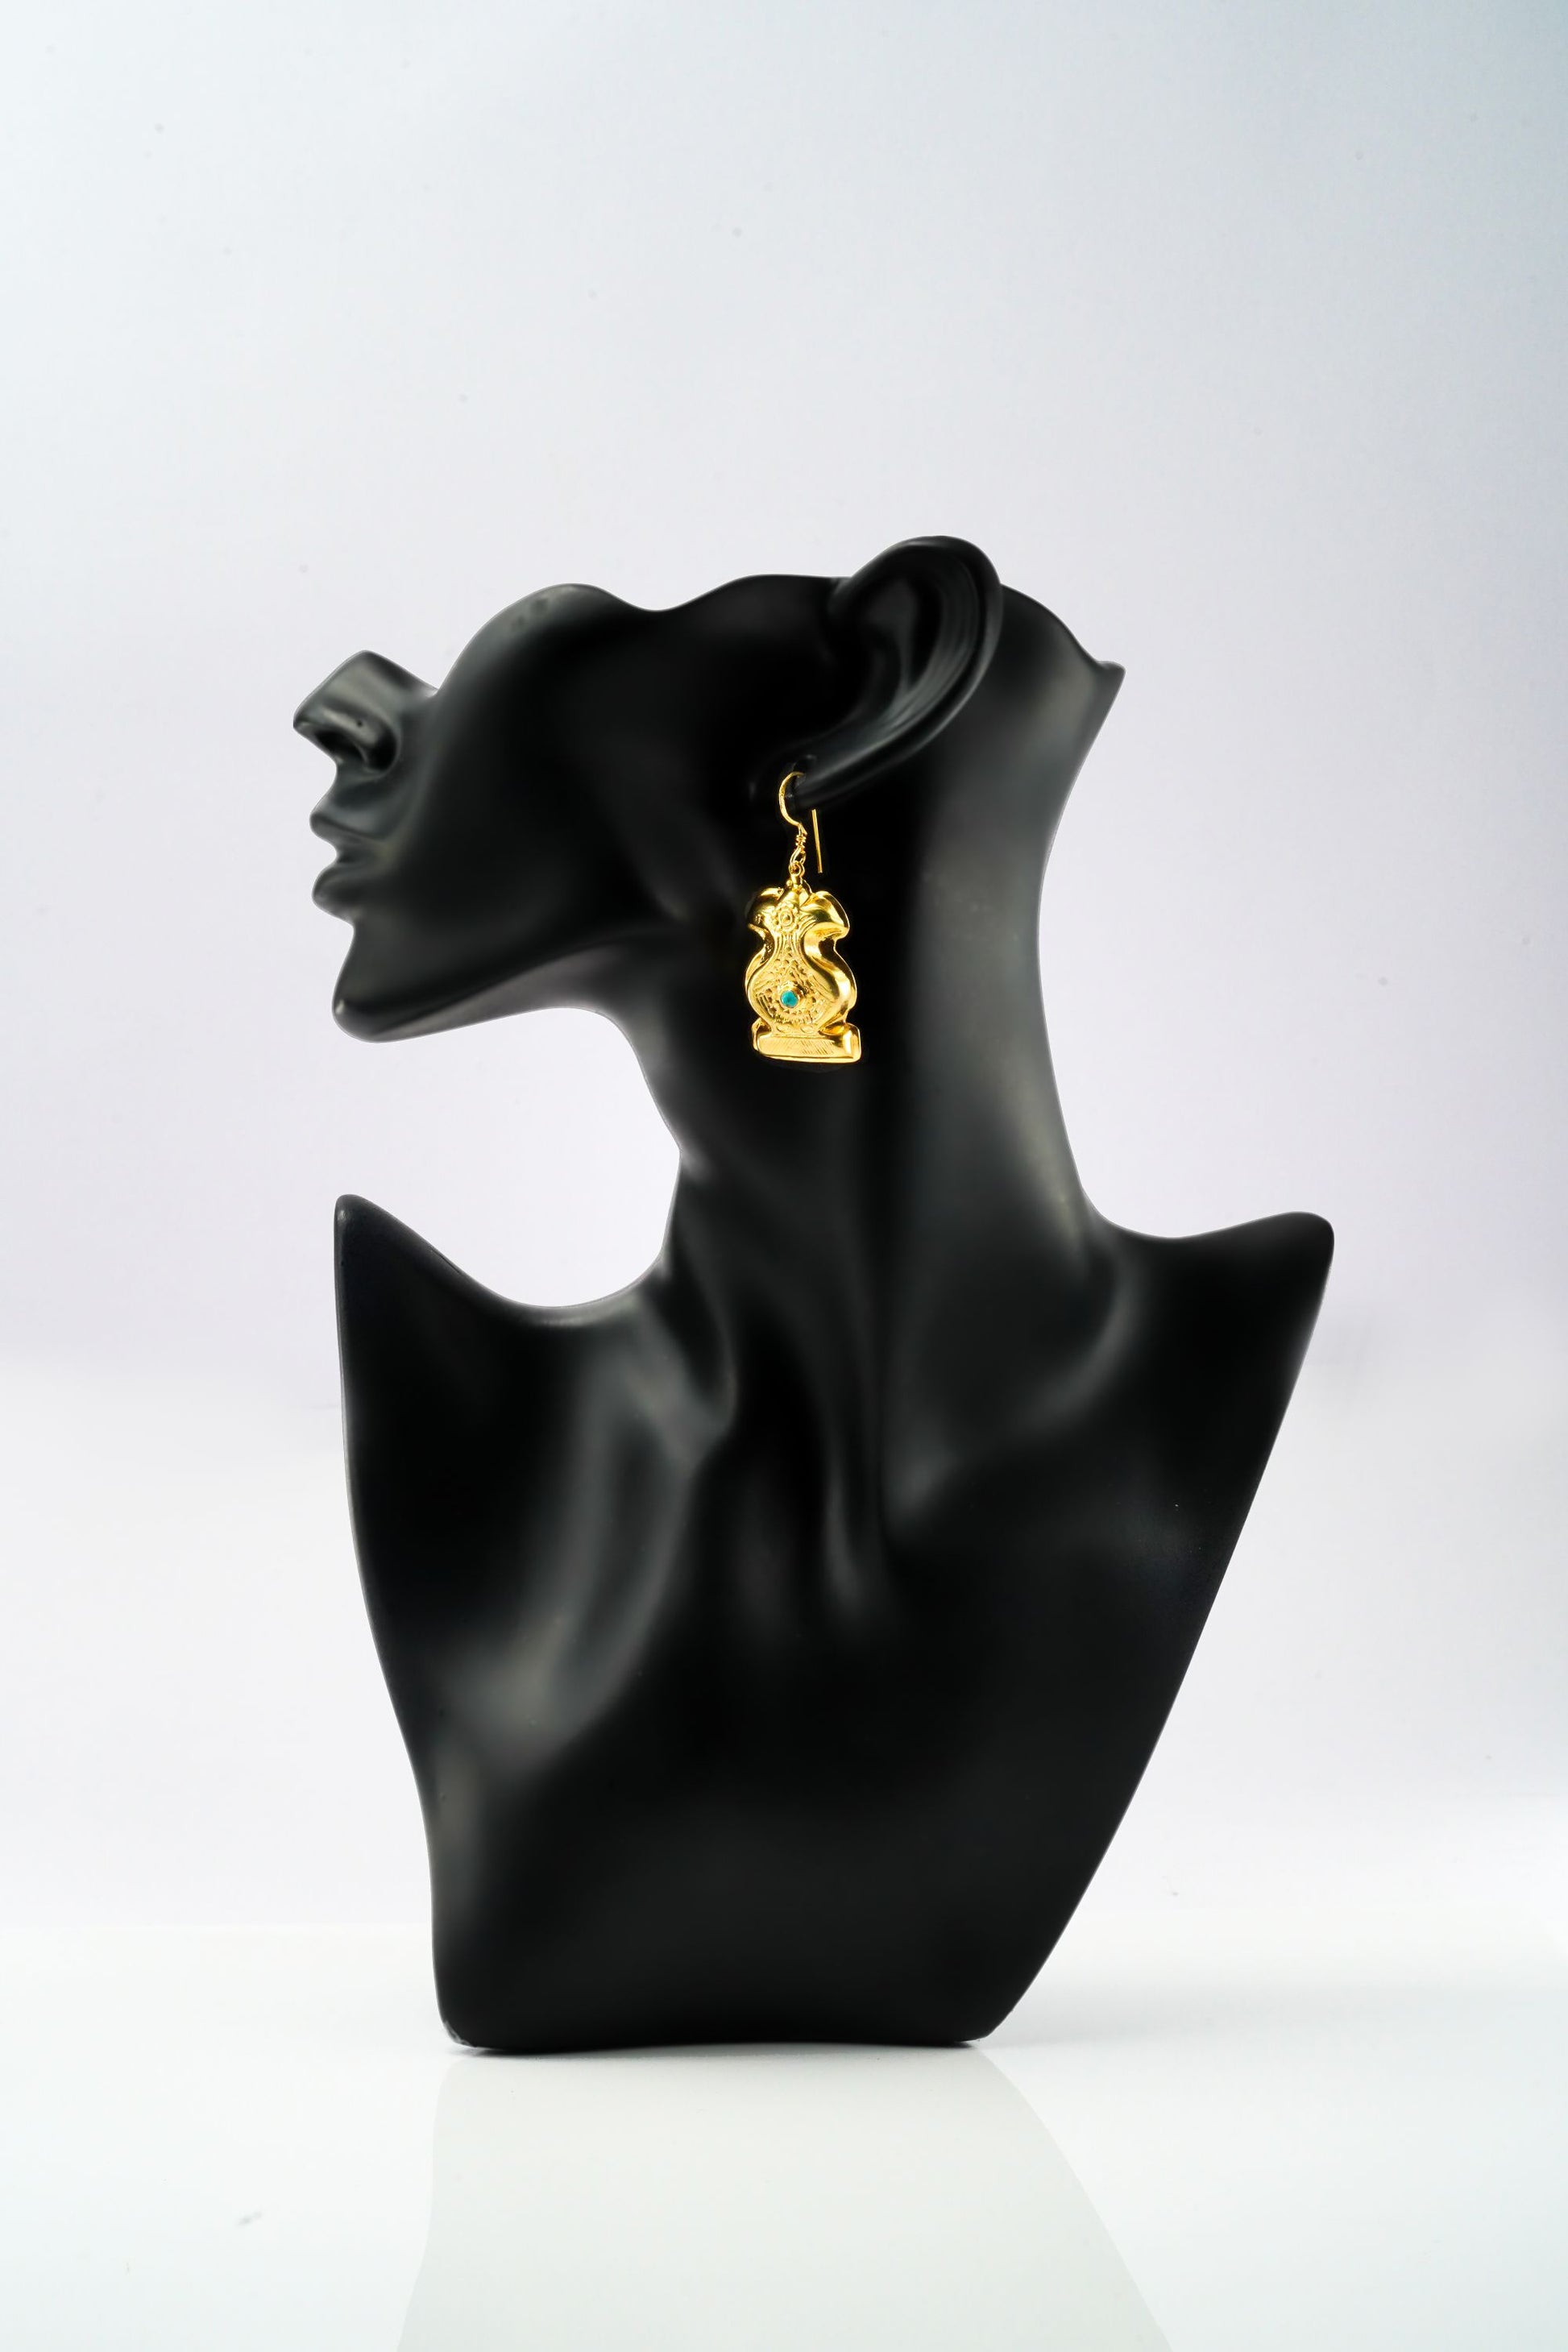 Gold Hollow Earring with Turquoise Stone - Neeta Boochra Jewellery